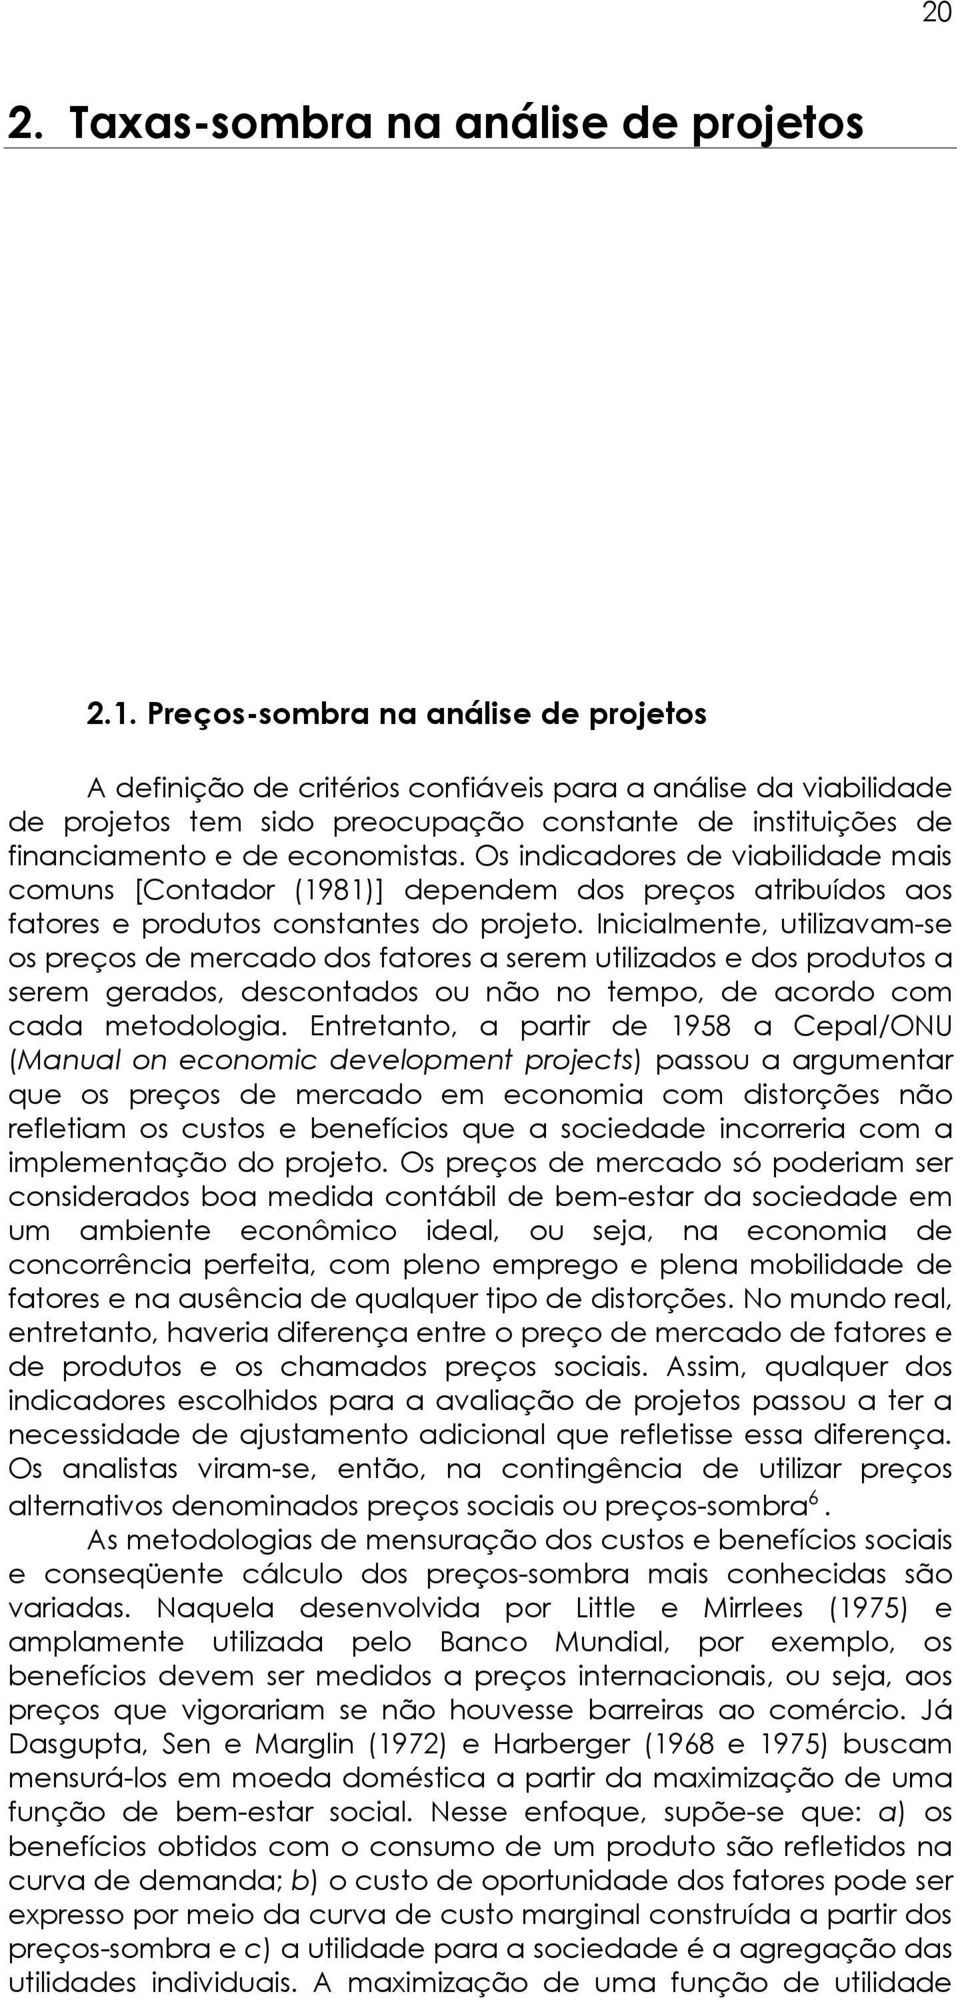 Os indicadores de viabilidade ais couns [Contador (1981)] depende dos preços atribuídos aos fatores e produtos constantes do projeto.